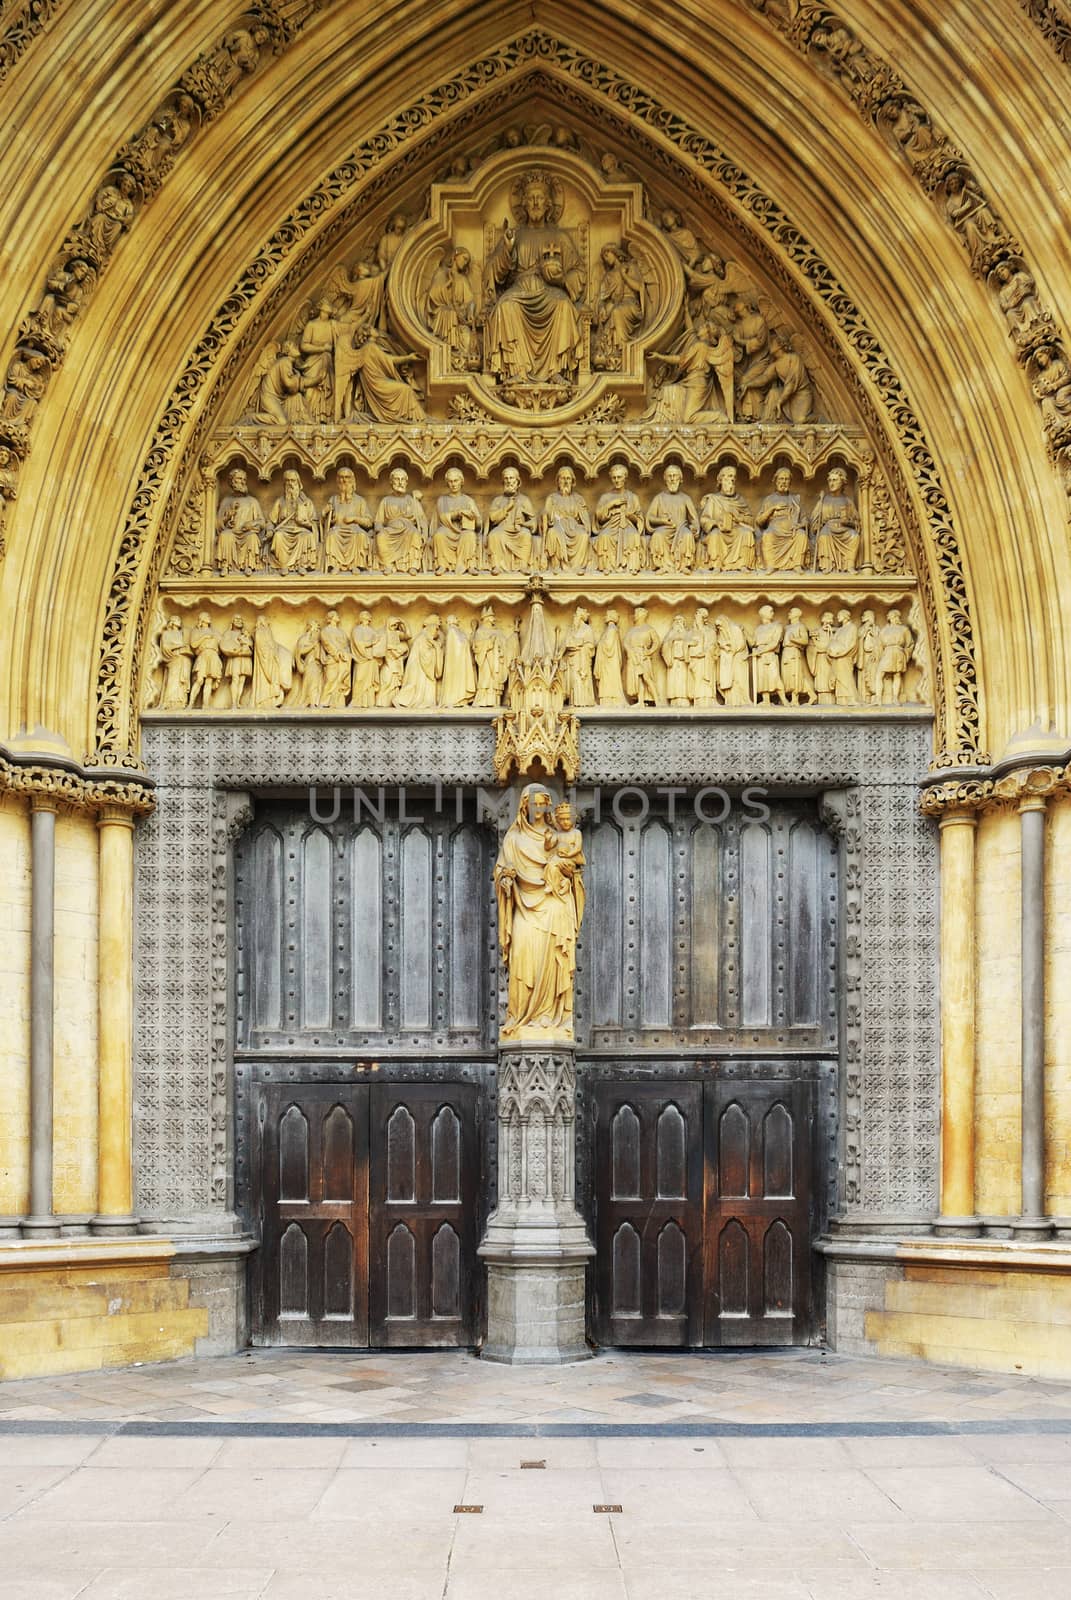 westminster abbey entrance door, London, UK